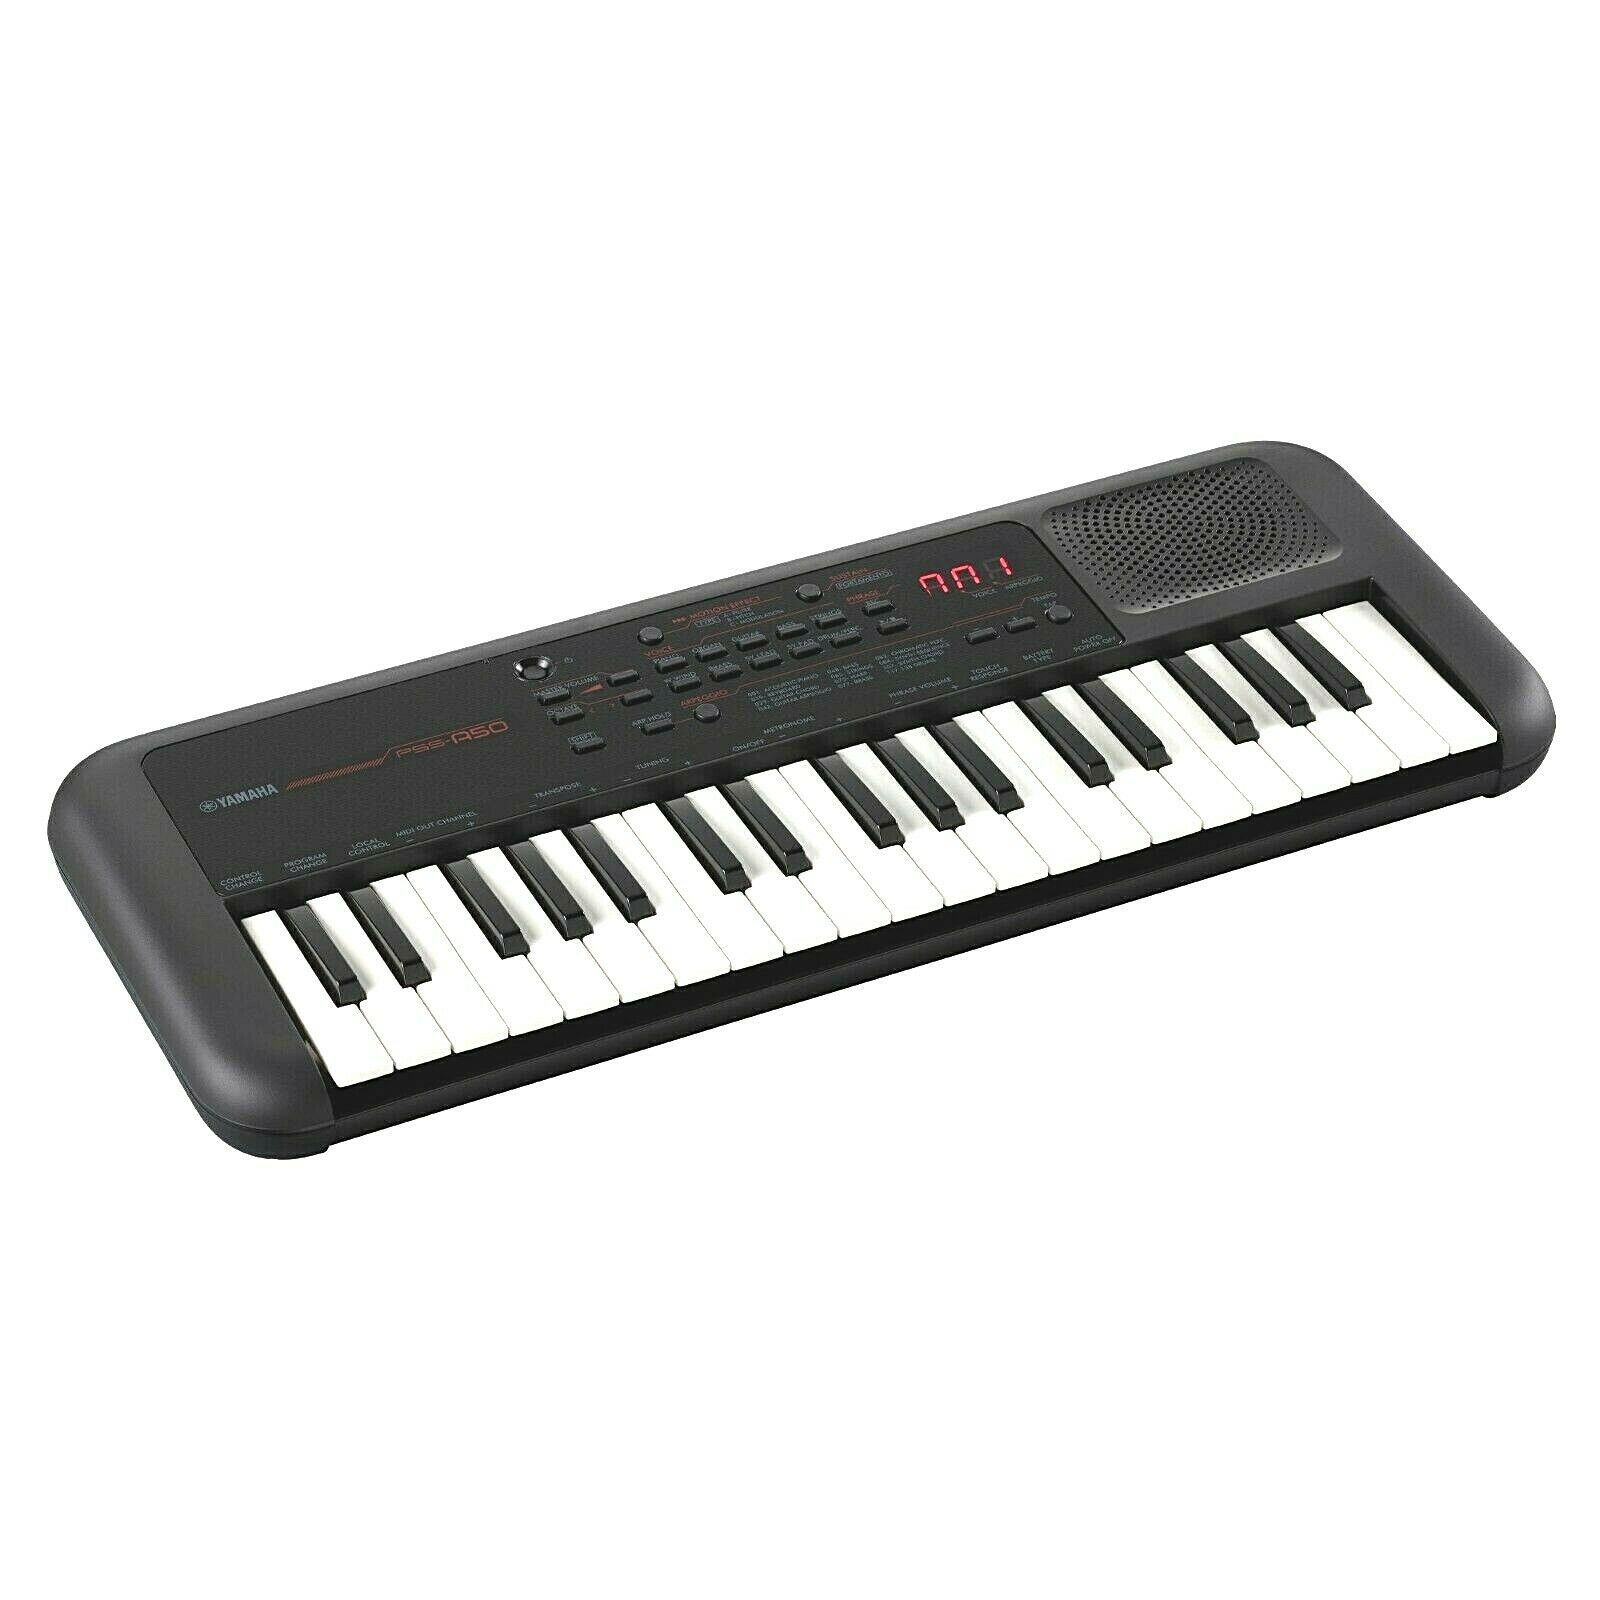 YAMAHA PSSA50 Portable Digital Mini Keyboard